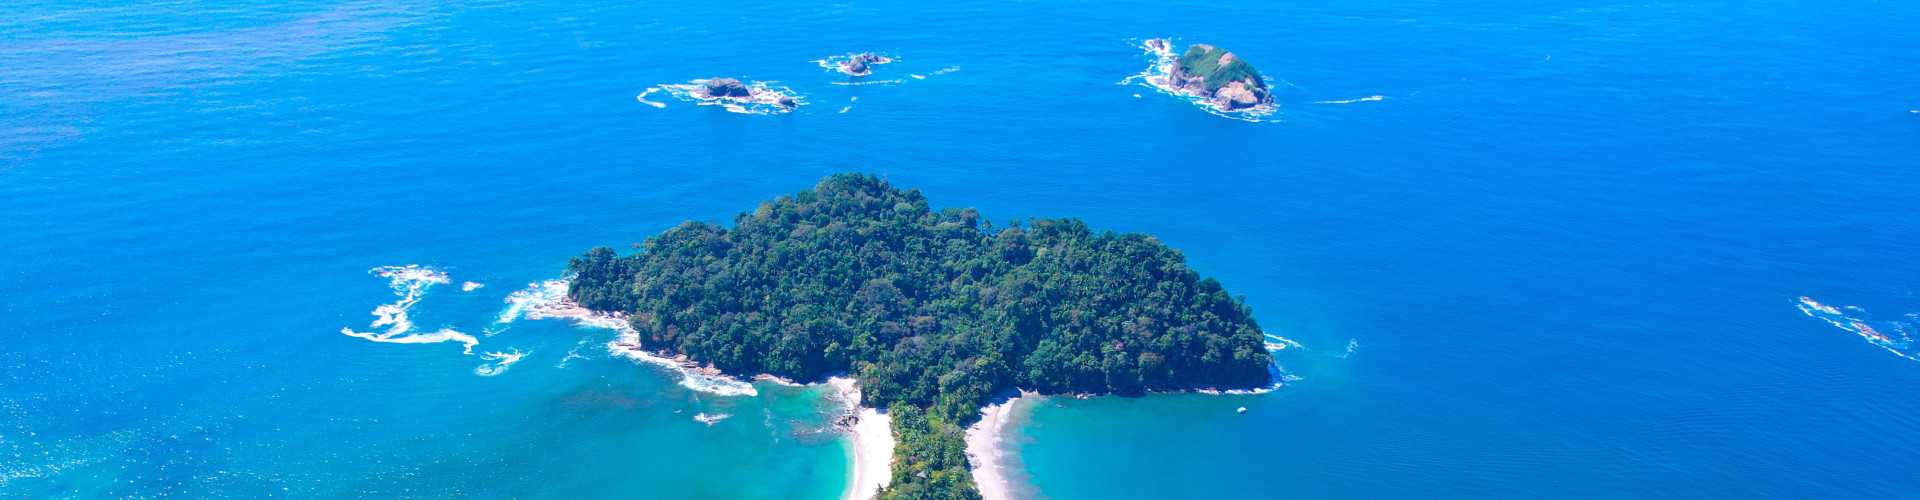 jungle beach ocean costa rica villas